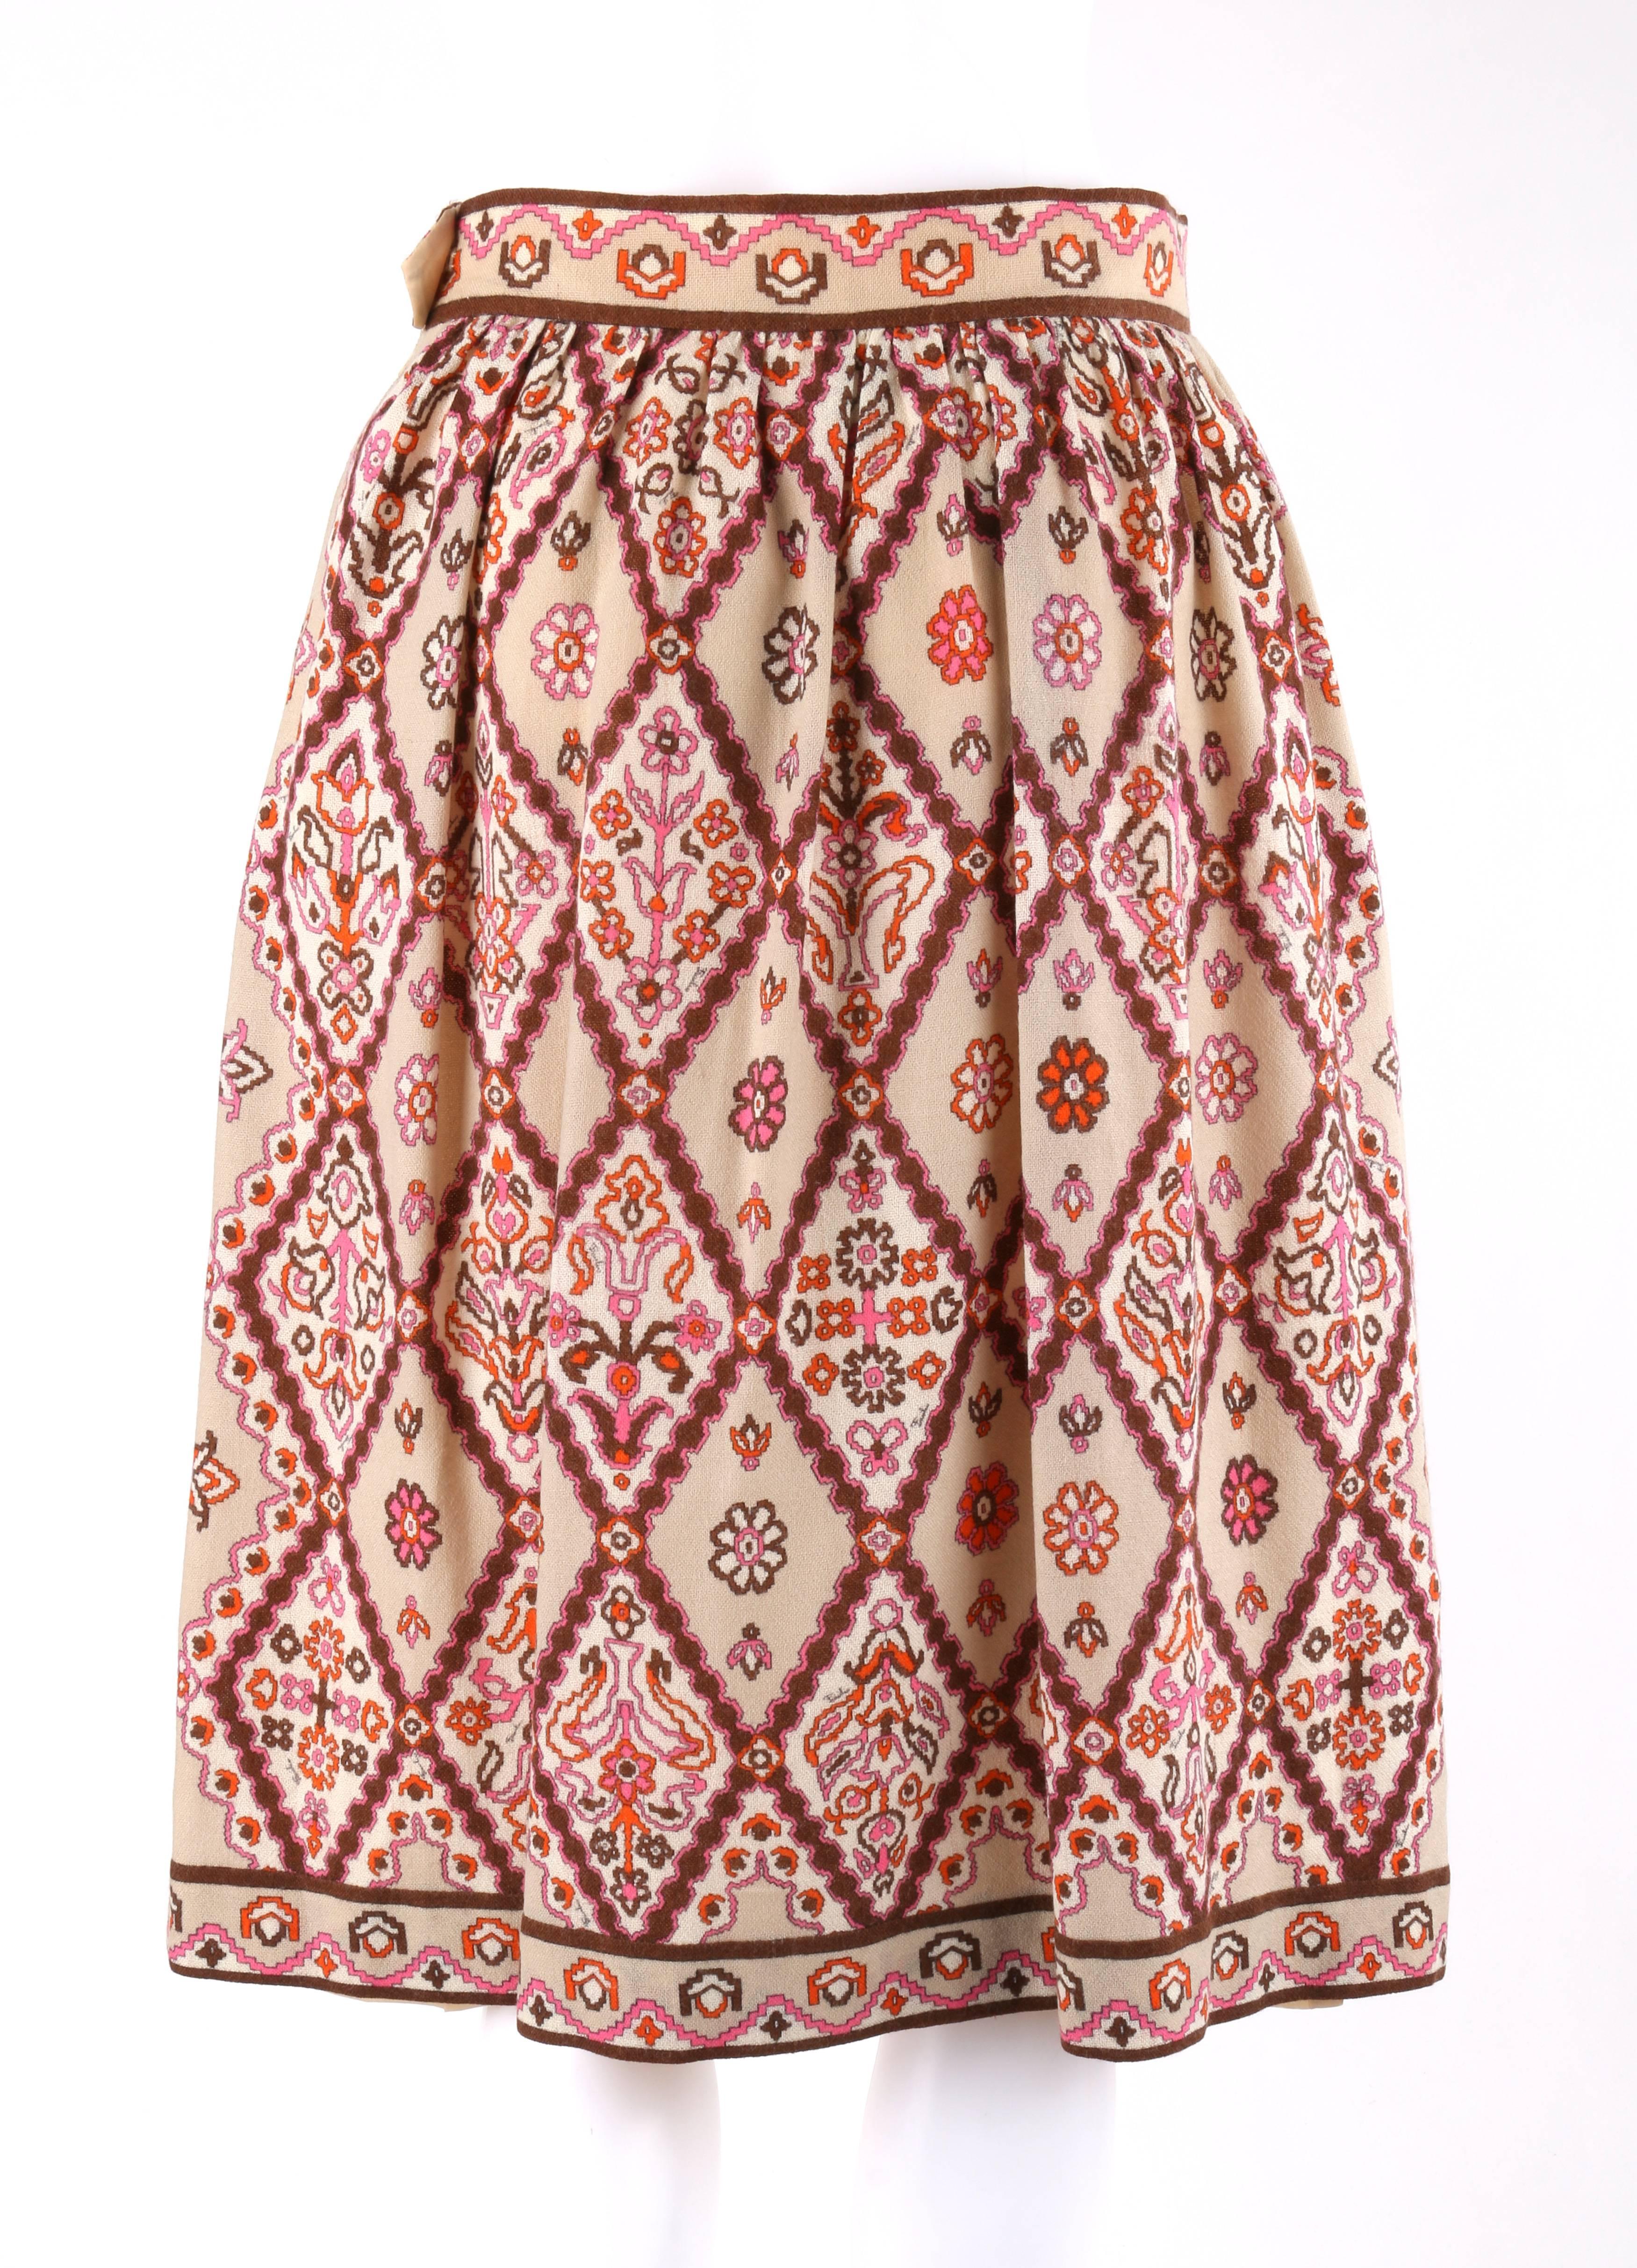 Emilio Pucci Signature Print Shirt Blouse Gathered Skirt Dress Set, circa 1950s For Sale 5